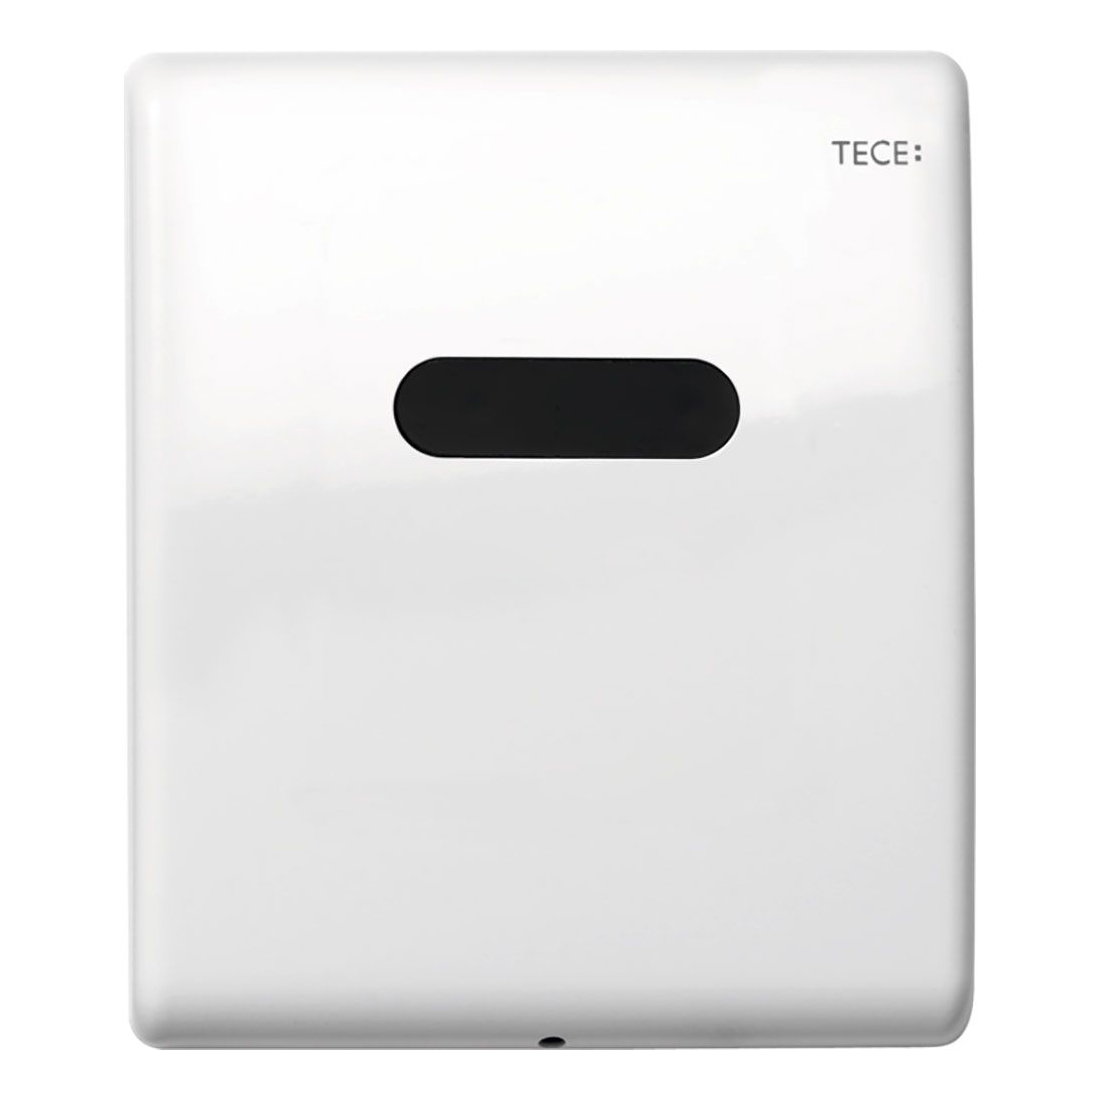 Кнопка для инсталляции Tece TECEplanus Urinal 9242356, 6 V батарея, белая глянцевая кнопка для инсталляции tece teceplanus 9240314 белый глянец